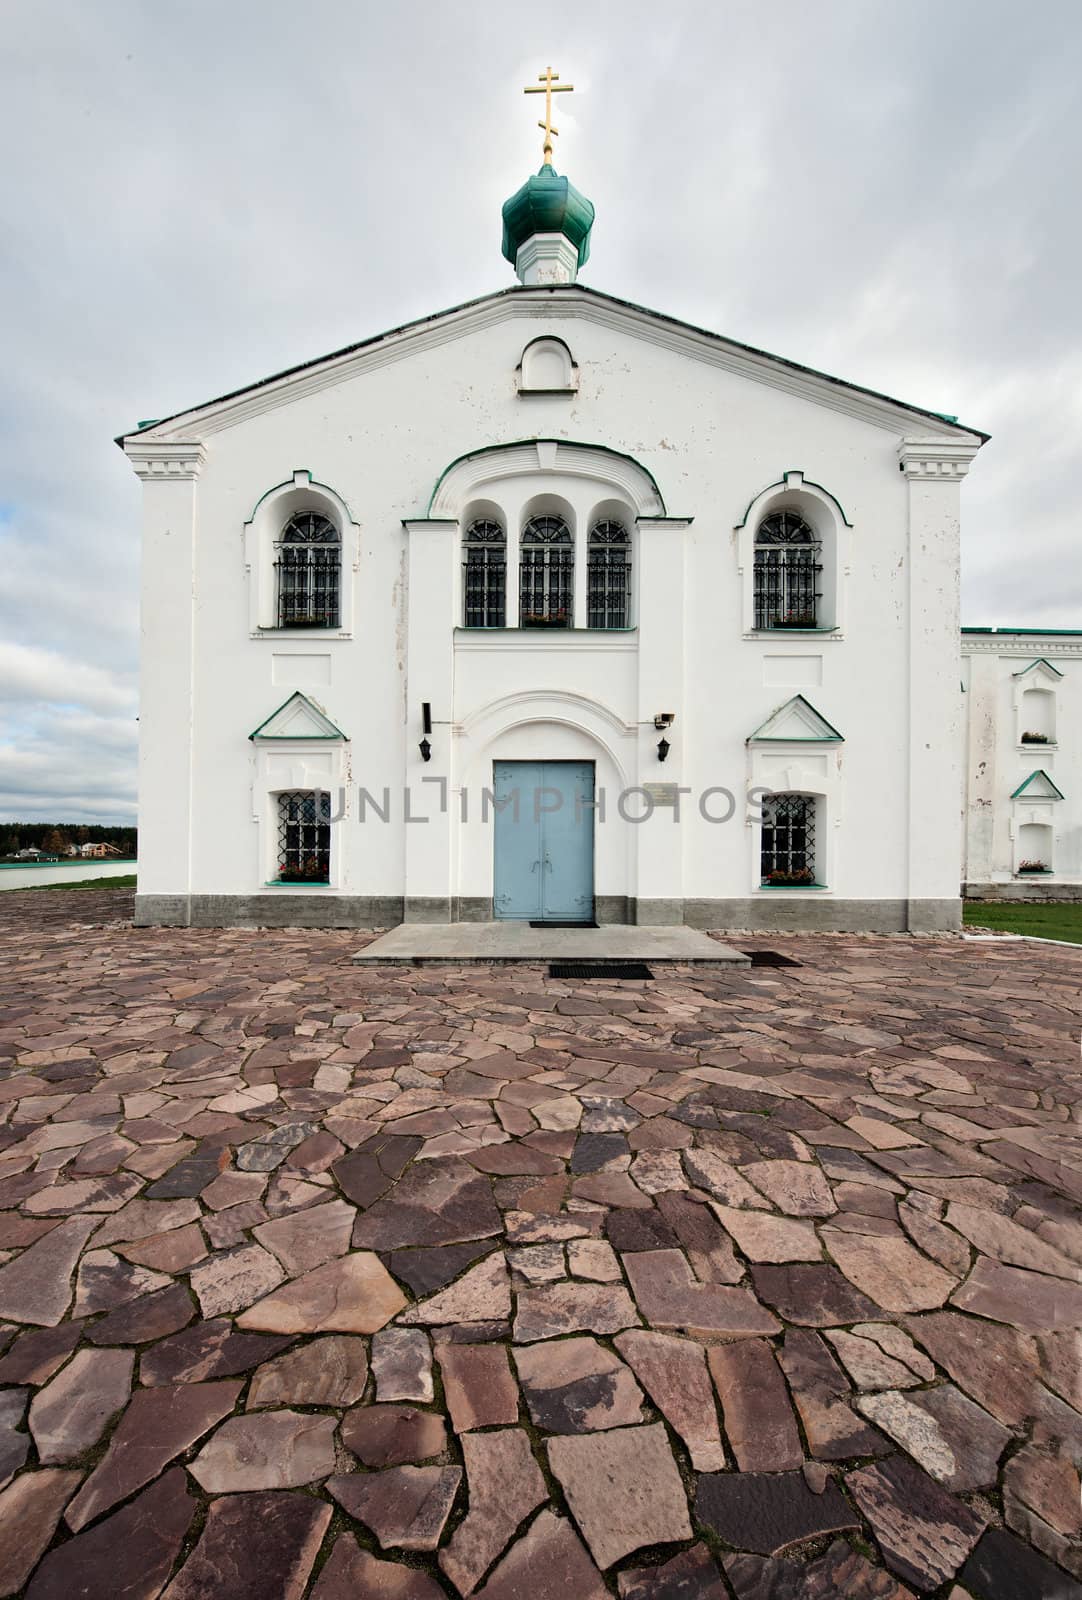 Aleksandro-Svirsky Monastery of the Holy Trinity.Spaso-Preobrazhenskiy cathedral   Leningrad region. Russia